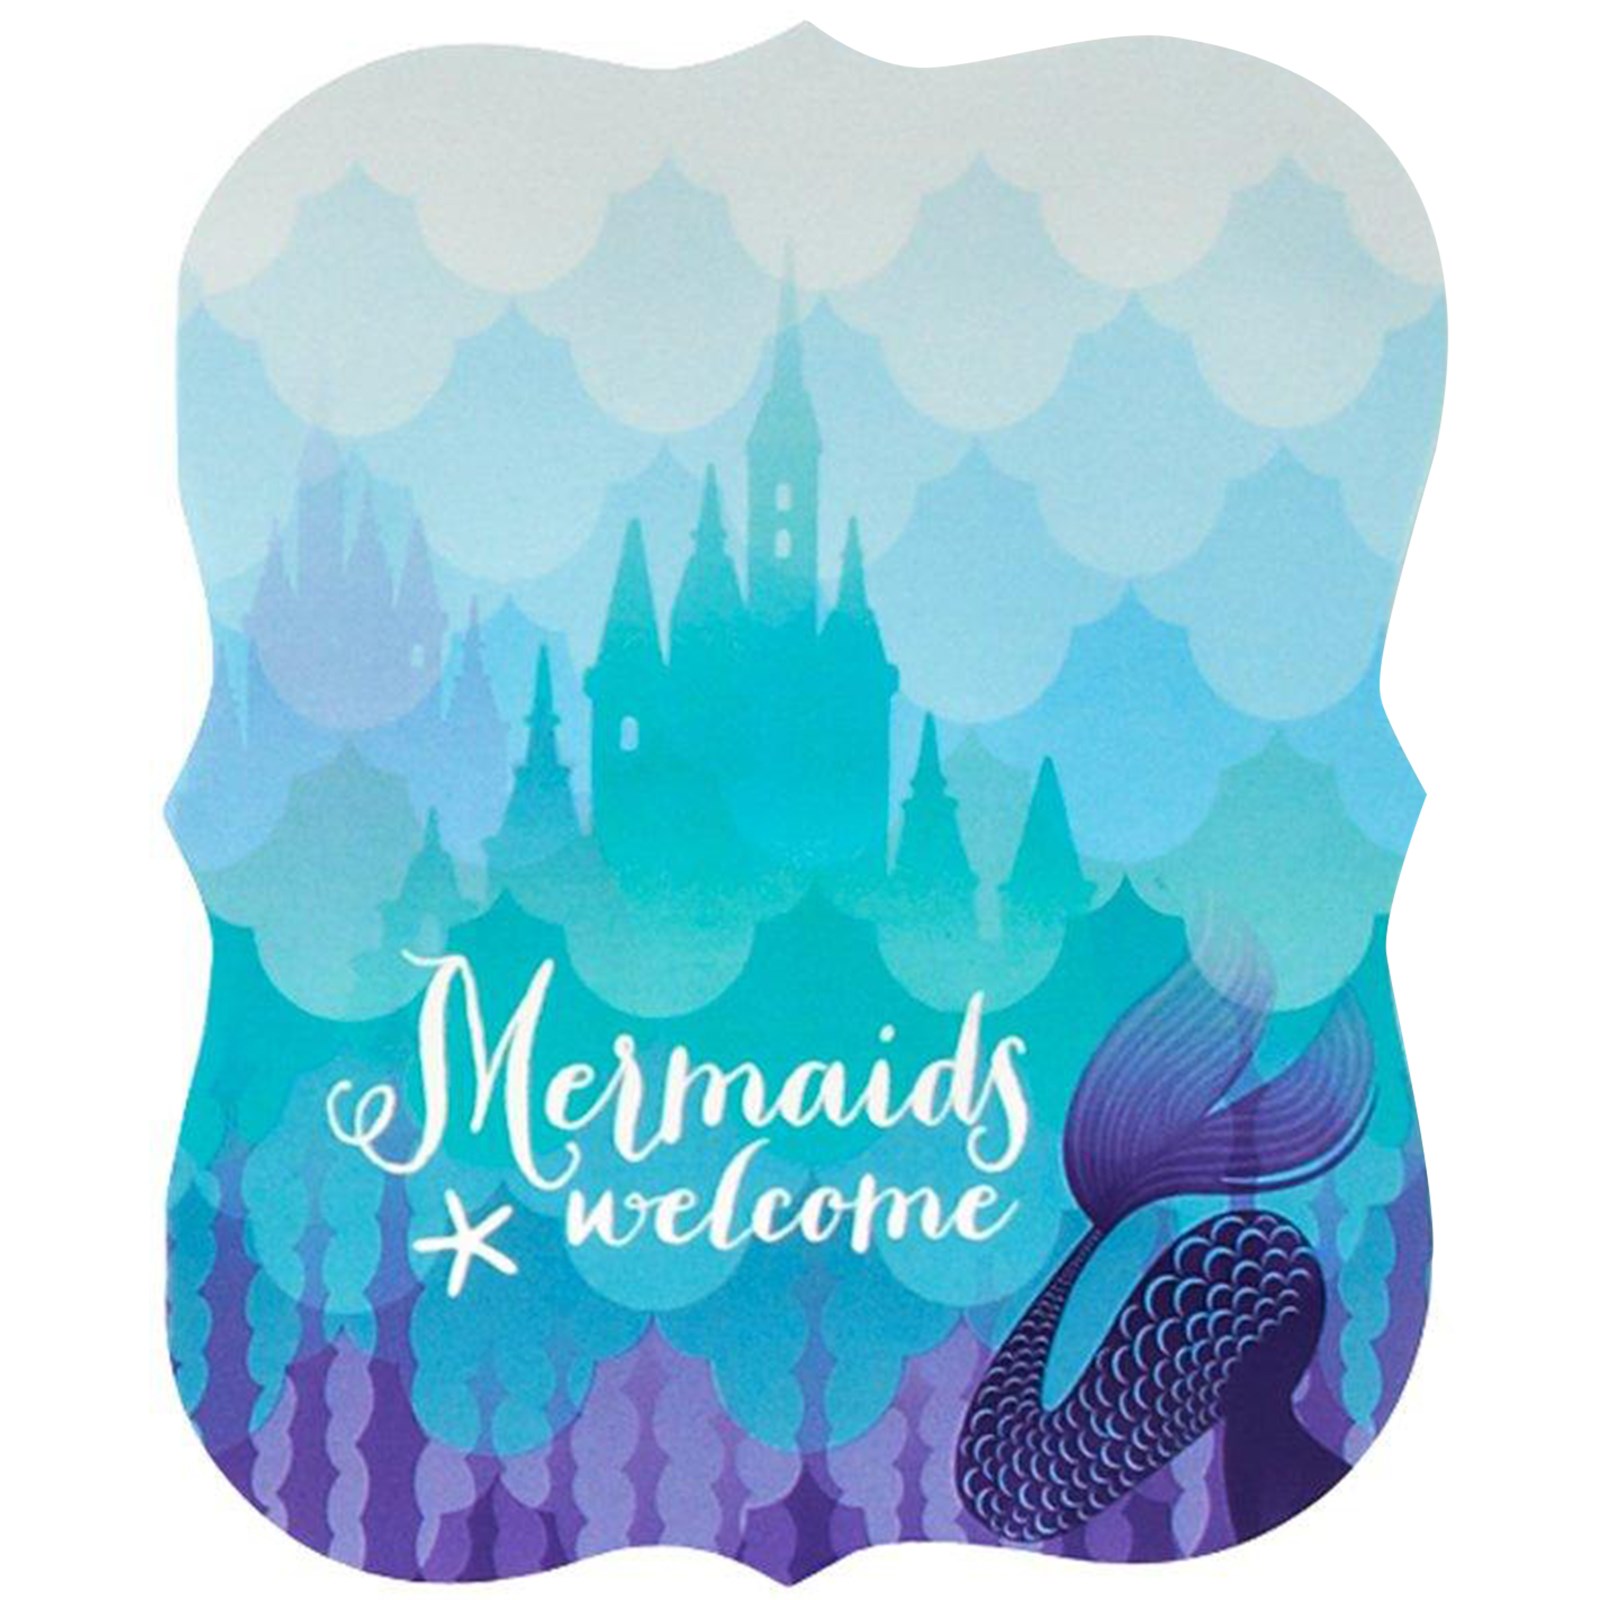 Mermaids Under the Sea Invitations